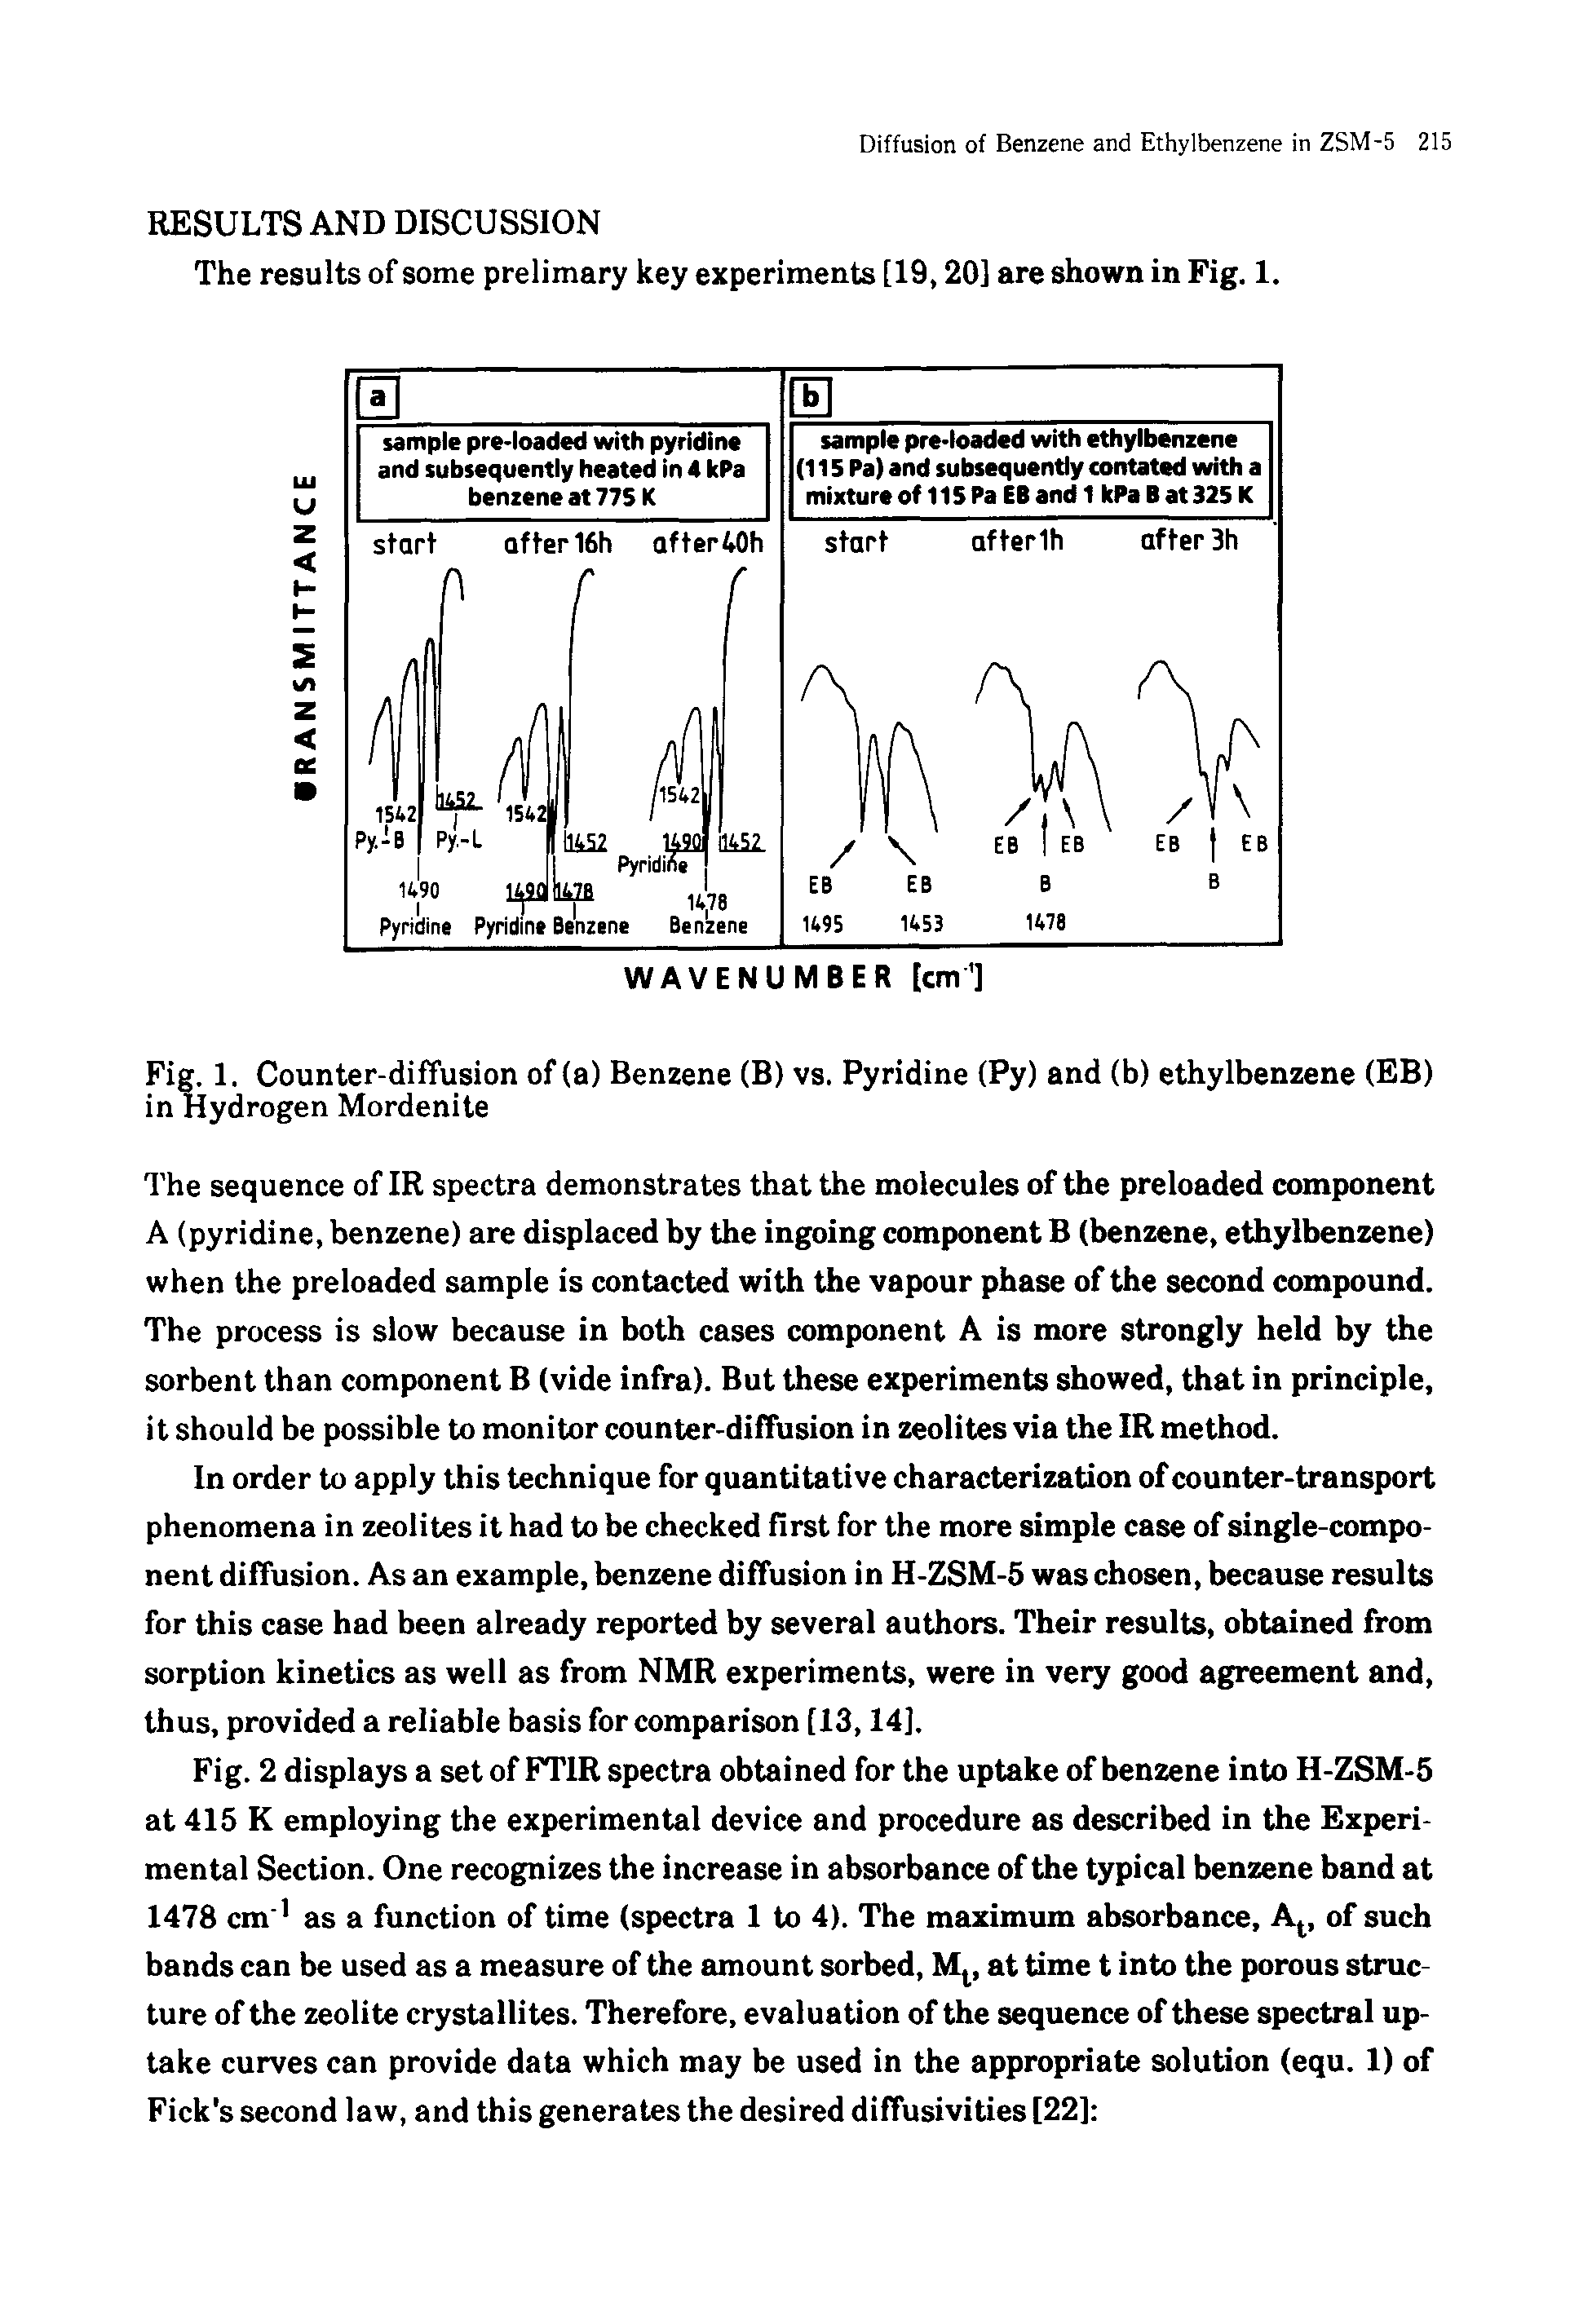 Fig. 1. Counter-diffusion of (a) Benzene (B) vs. Pyridine (Py) and (b) ethylbenzene (EB) in Hydrogen Mordenite...